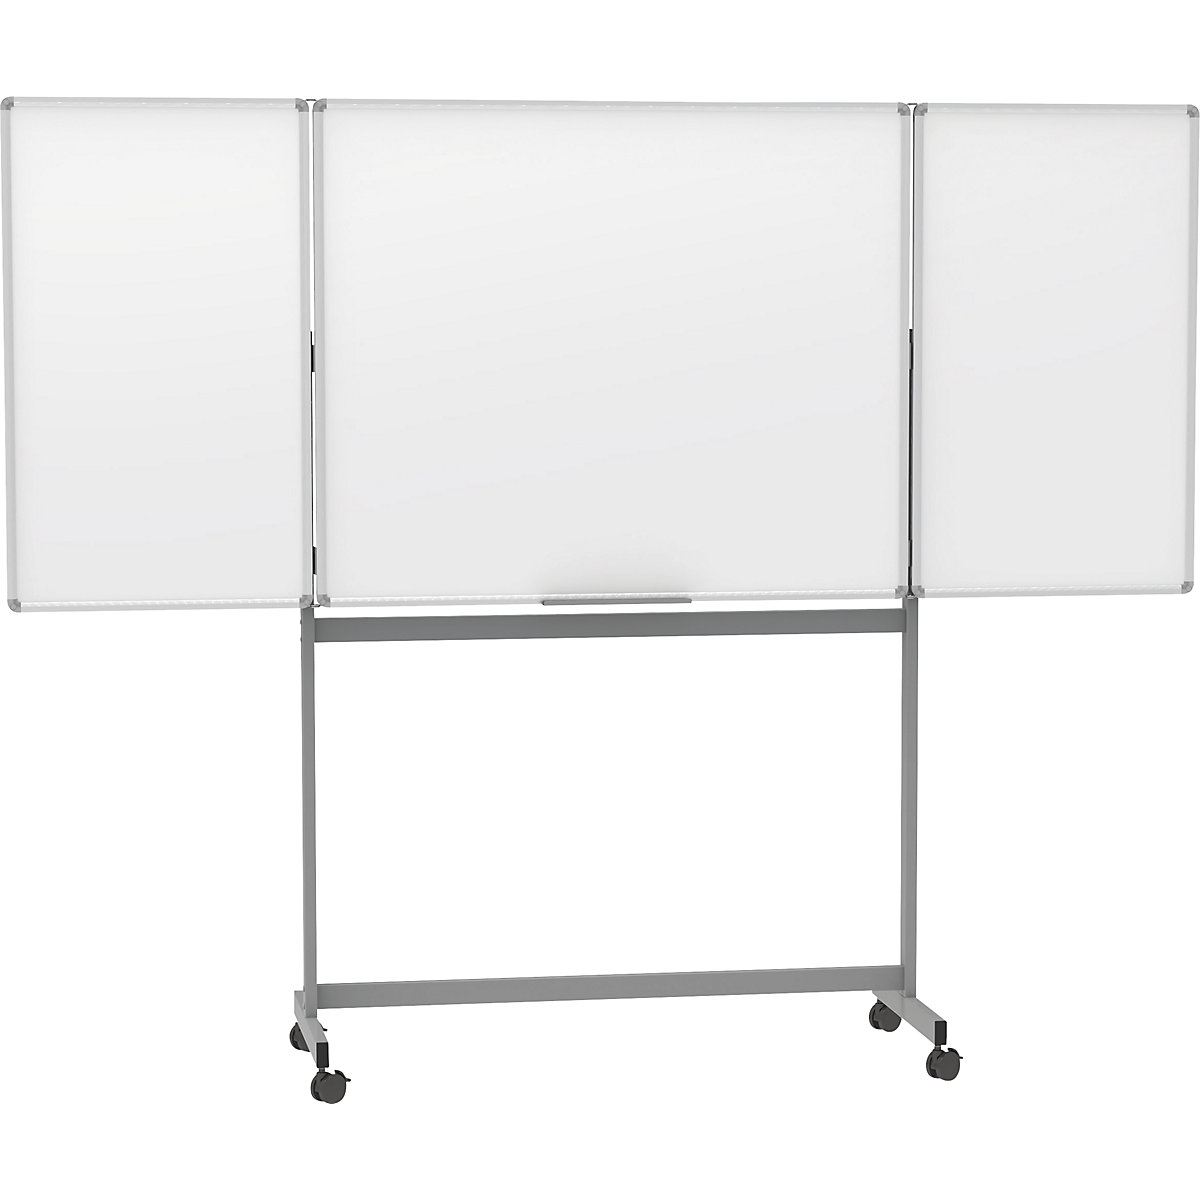 MAULstandard mobile folding board – MAUL